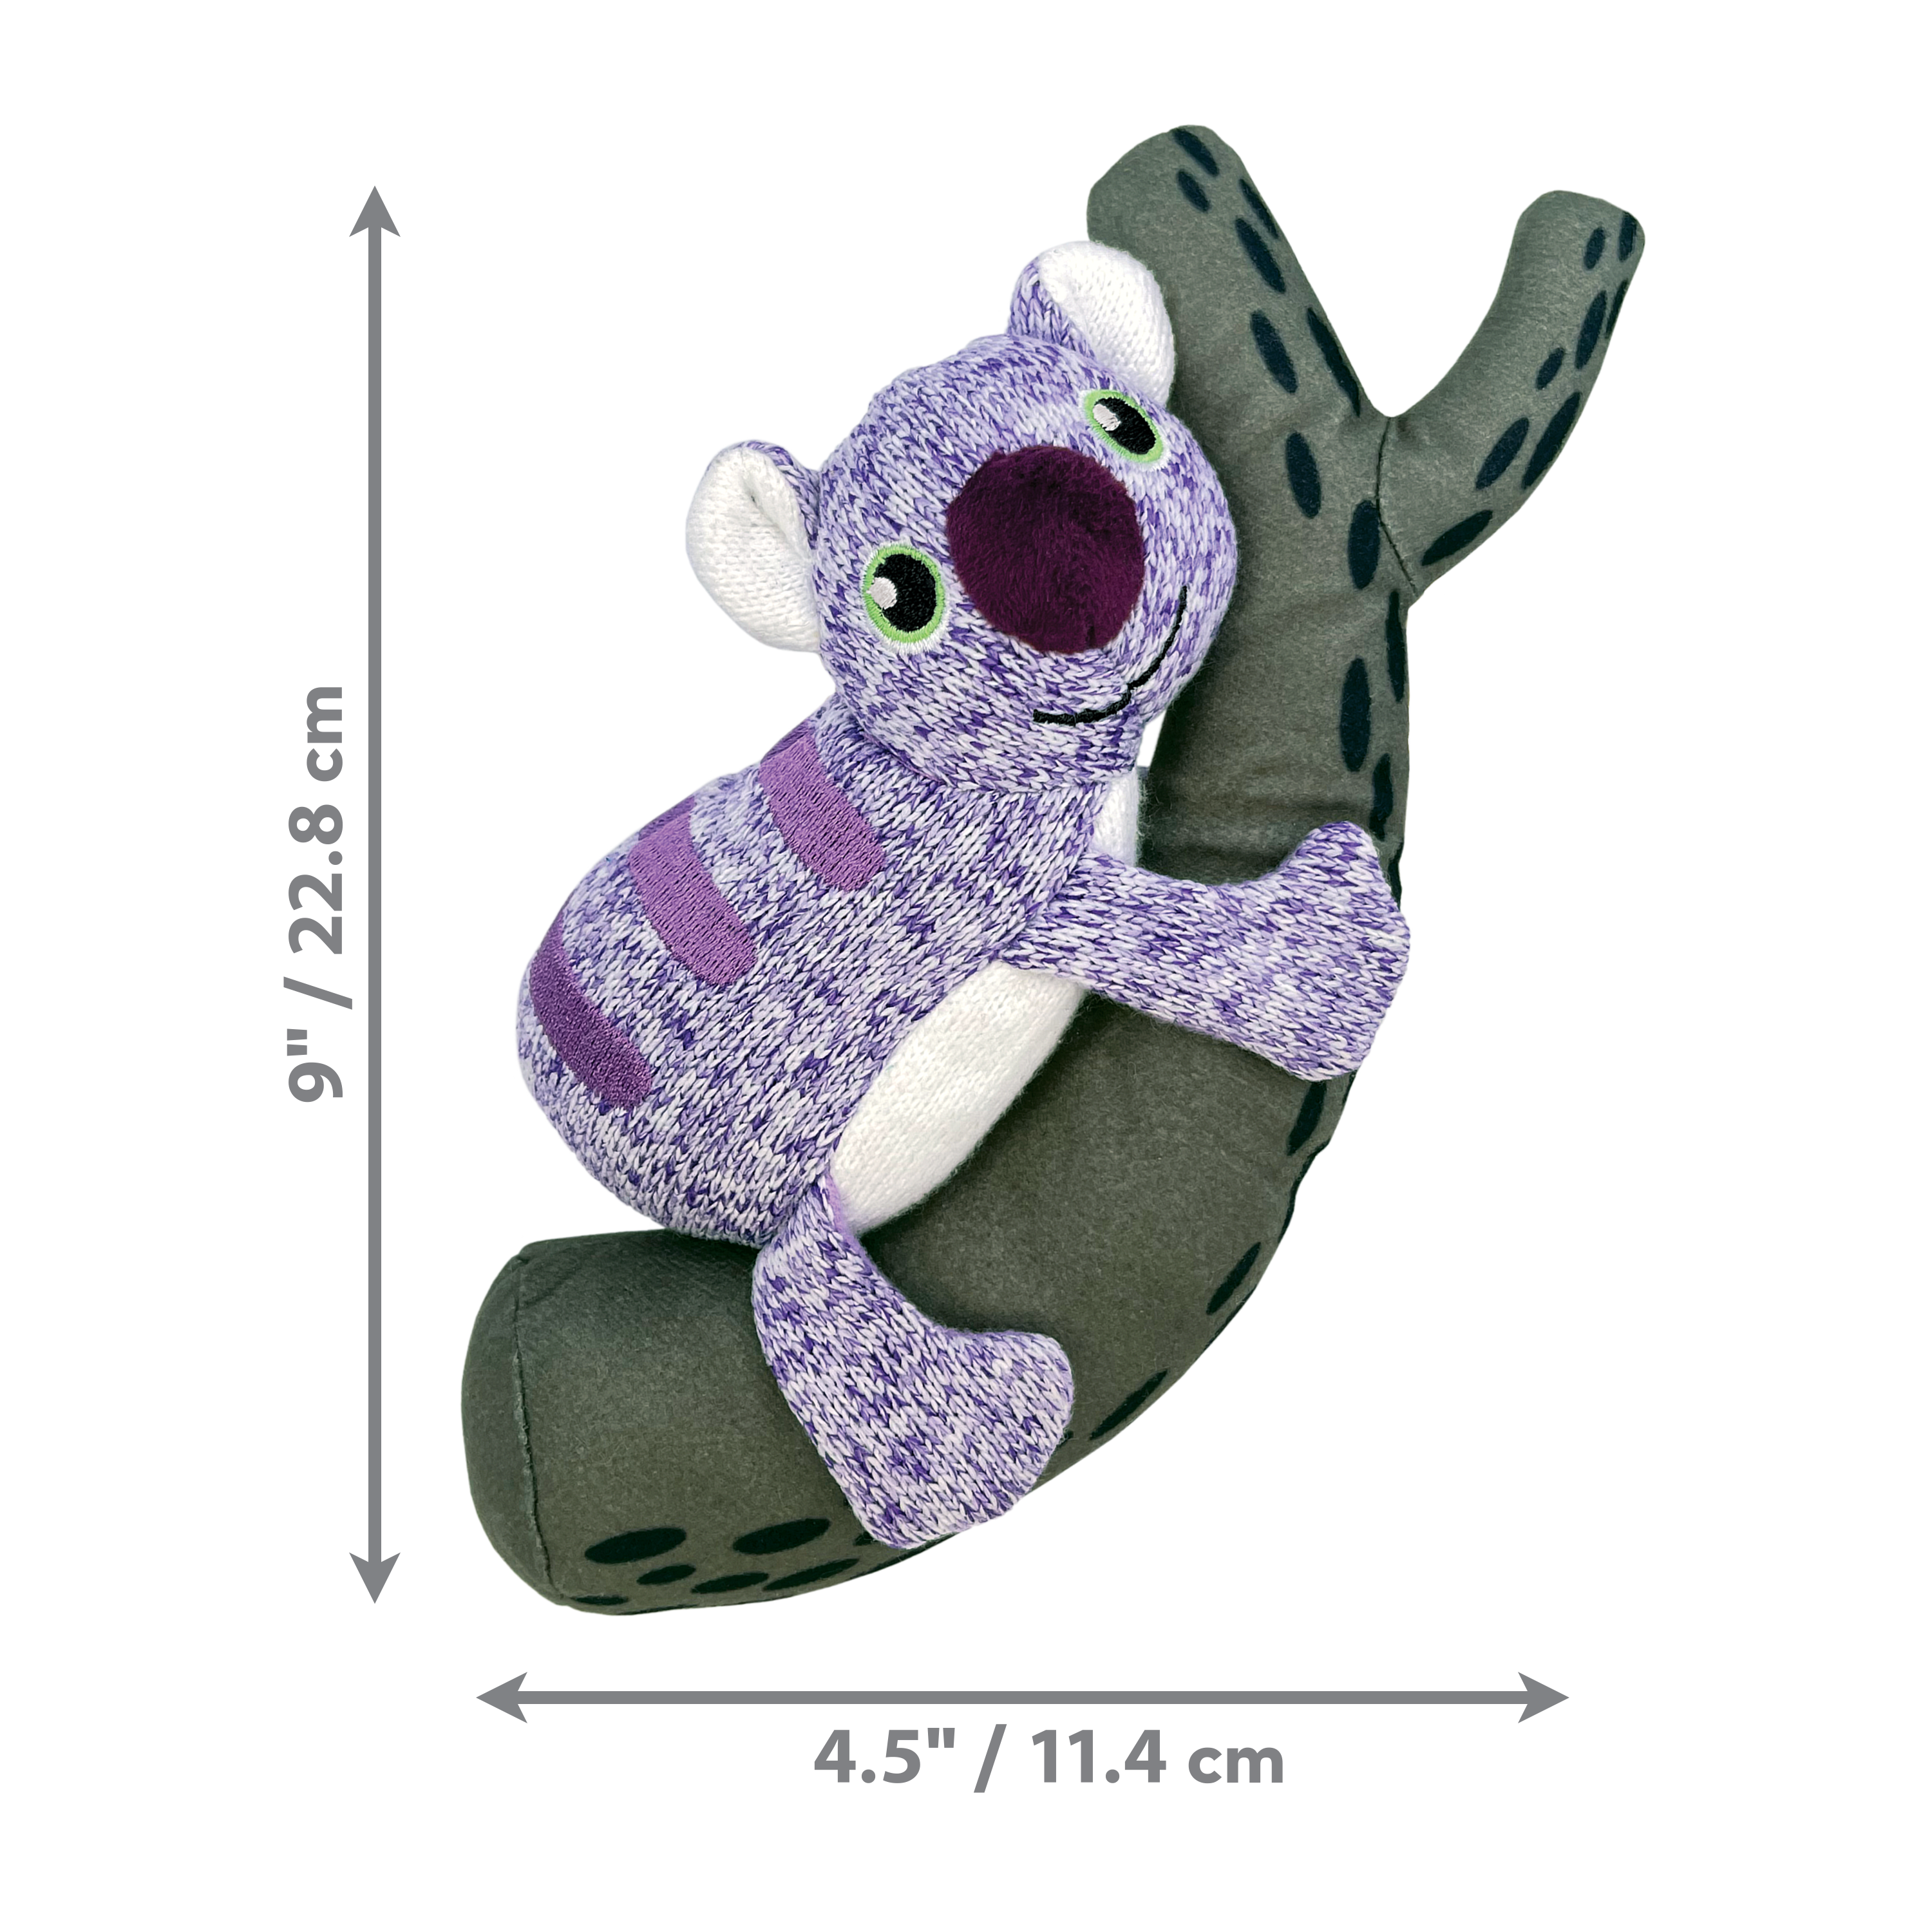 Pull-A-Partz Pals Koala dimoffpack produktbillede